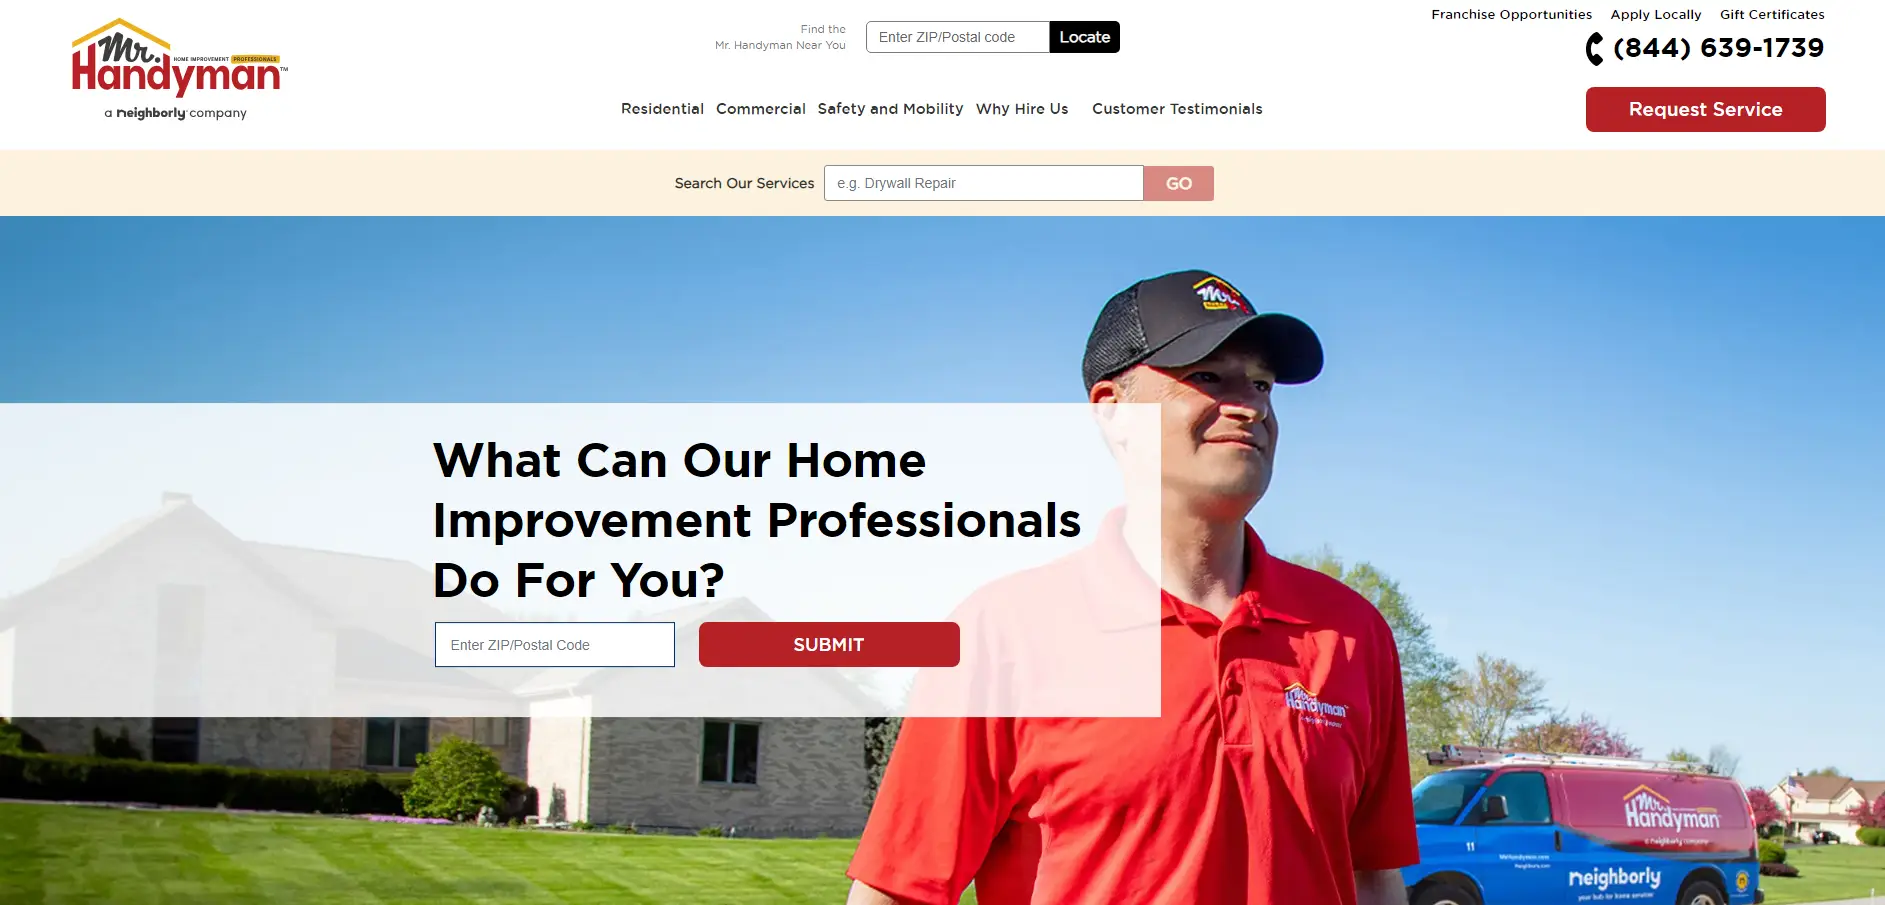 Mr. Handyman website template example